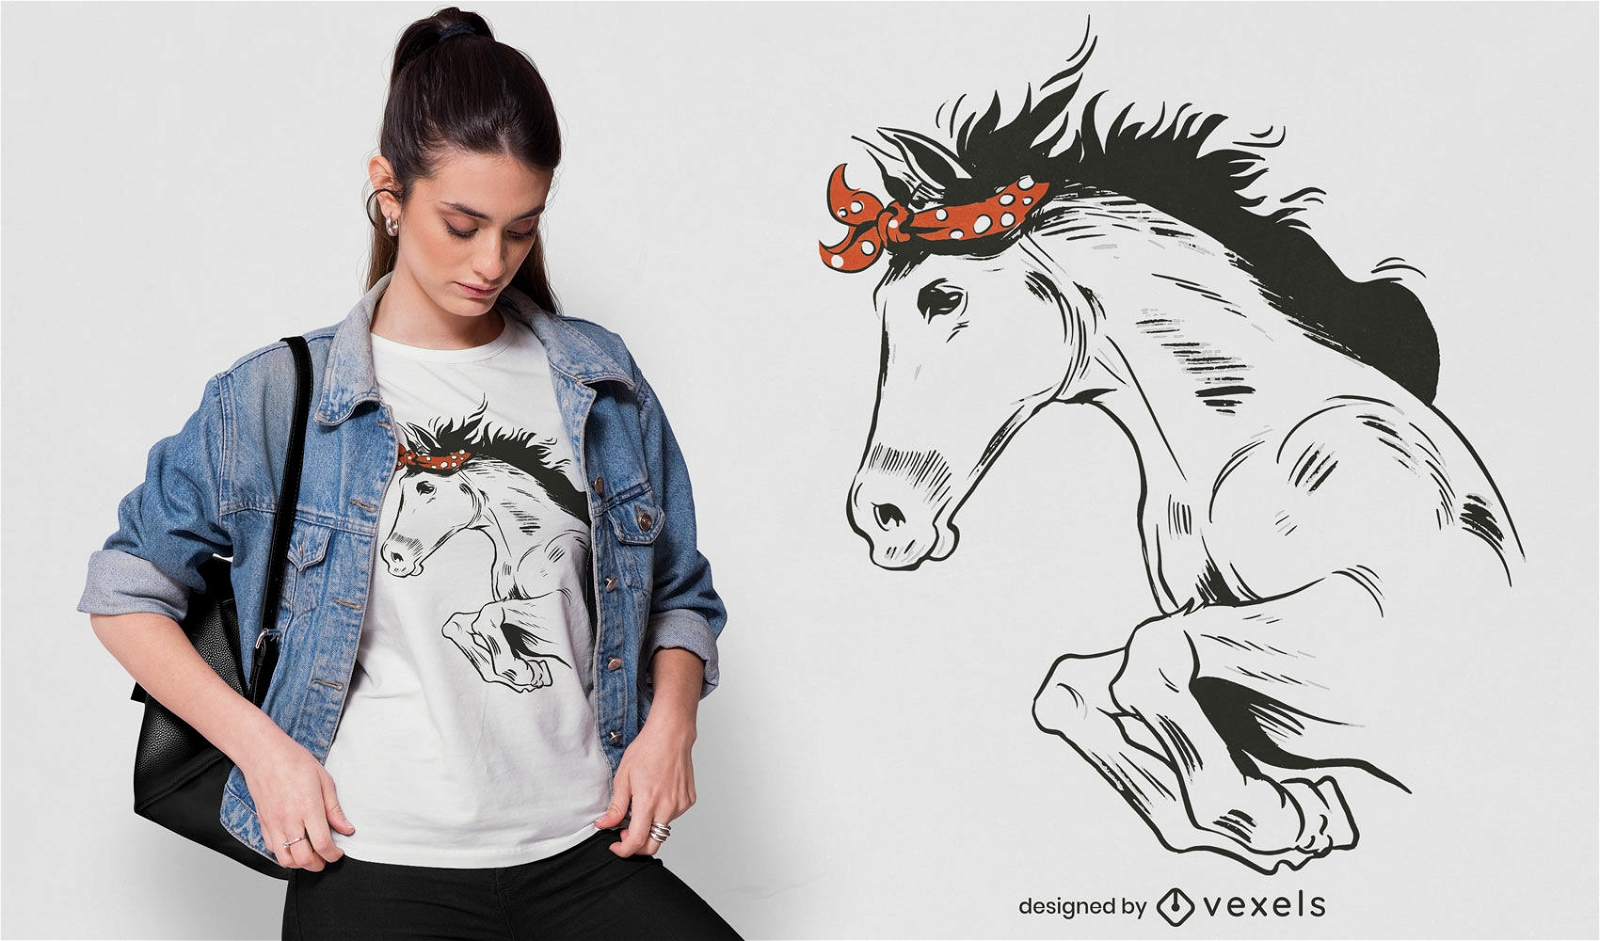 Bandana wild horse t-shirt design